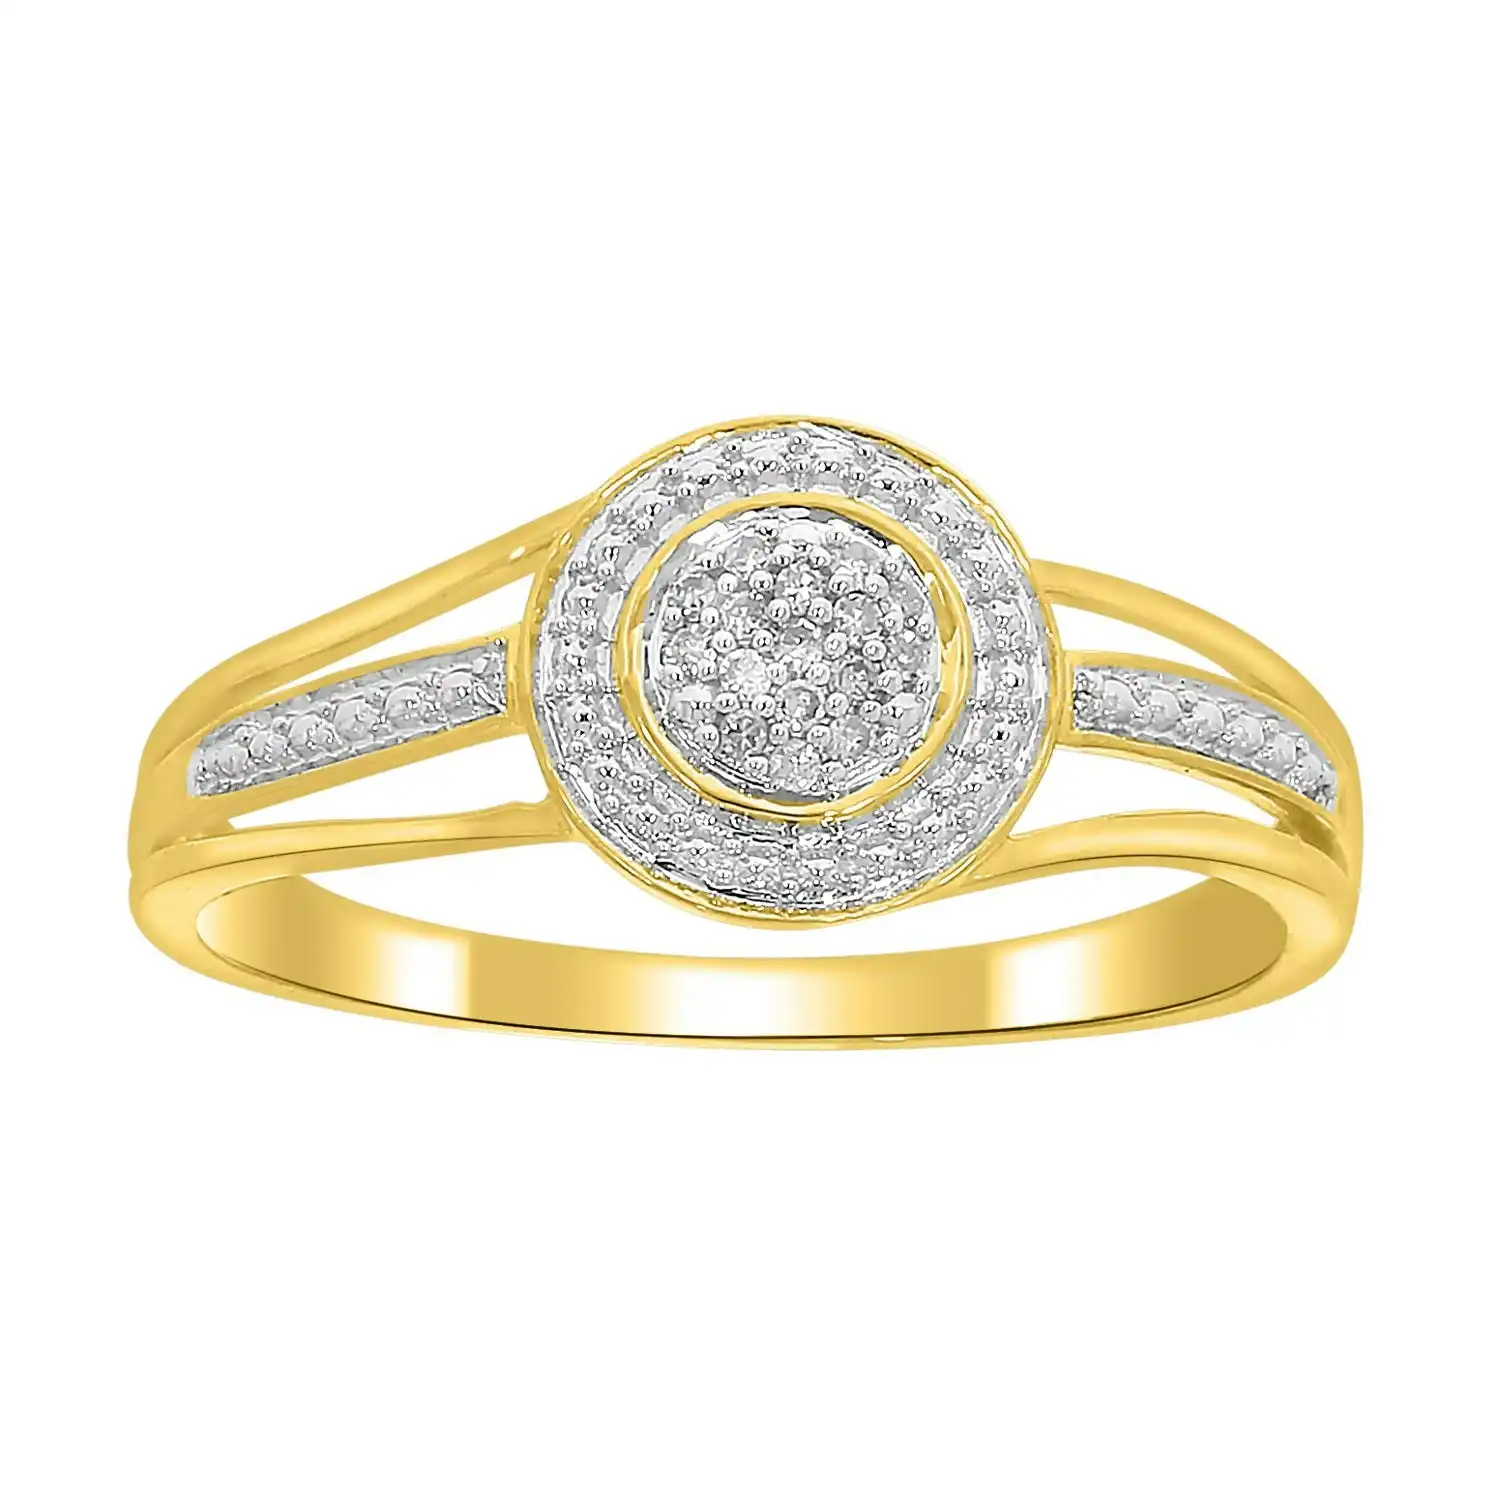 Alluring 9ct Yellow Gold Diamond Ring